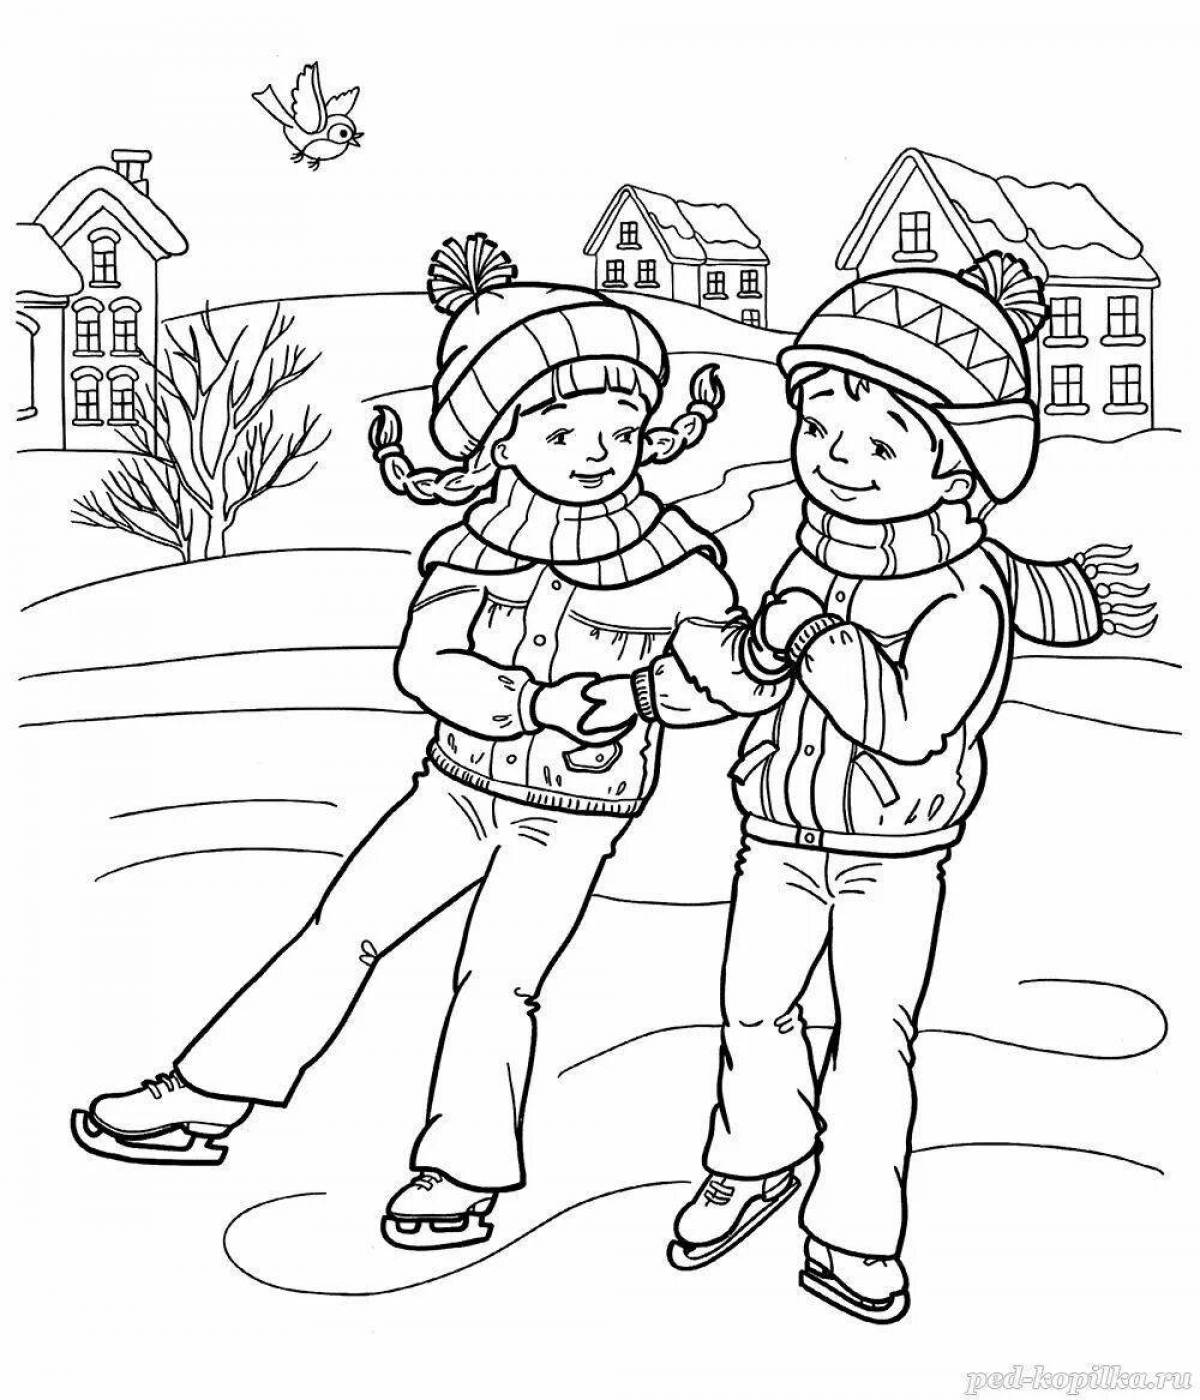 Joyful ice rink coloring page